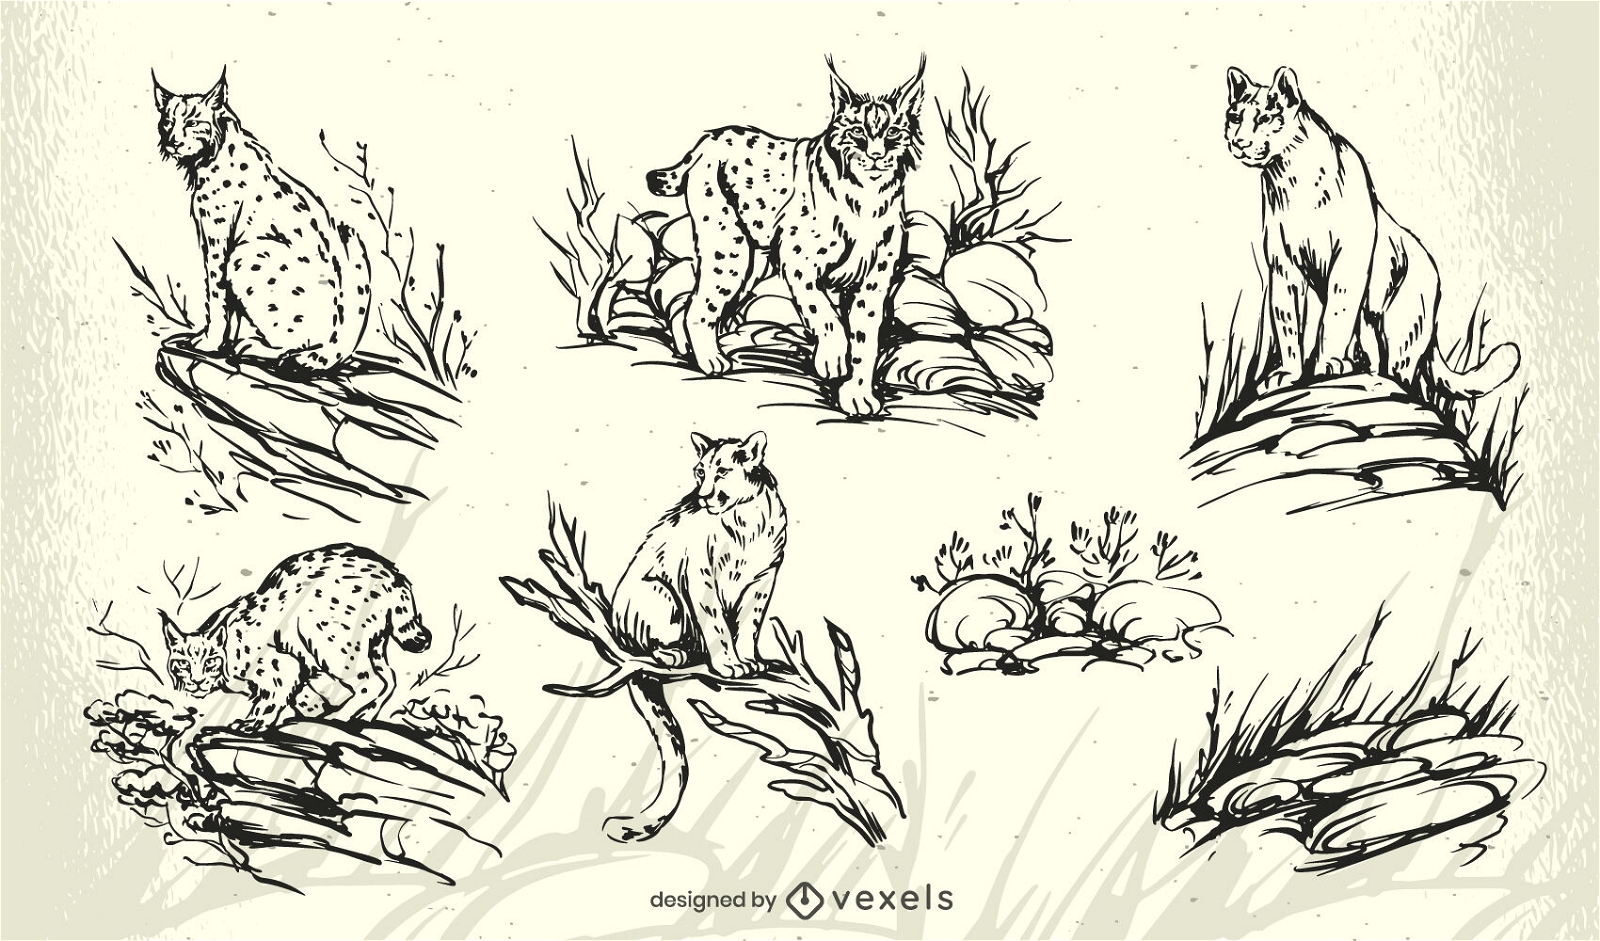 Lynx cat character set